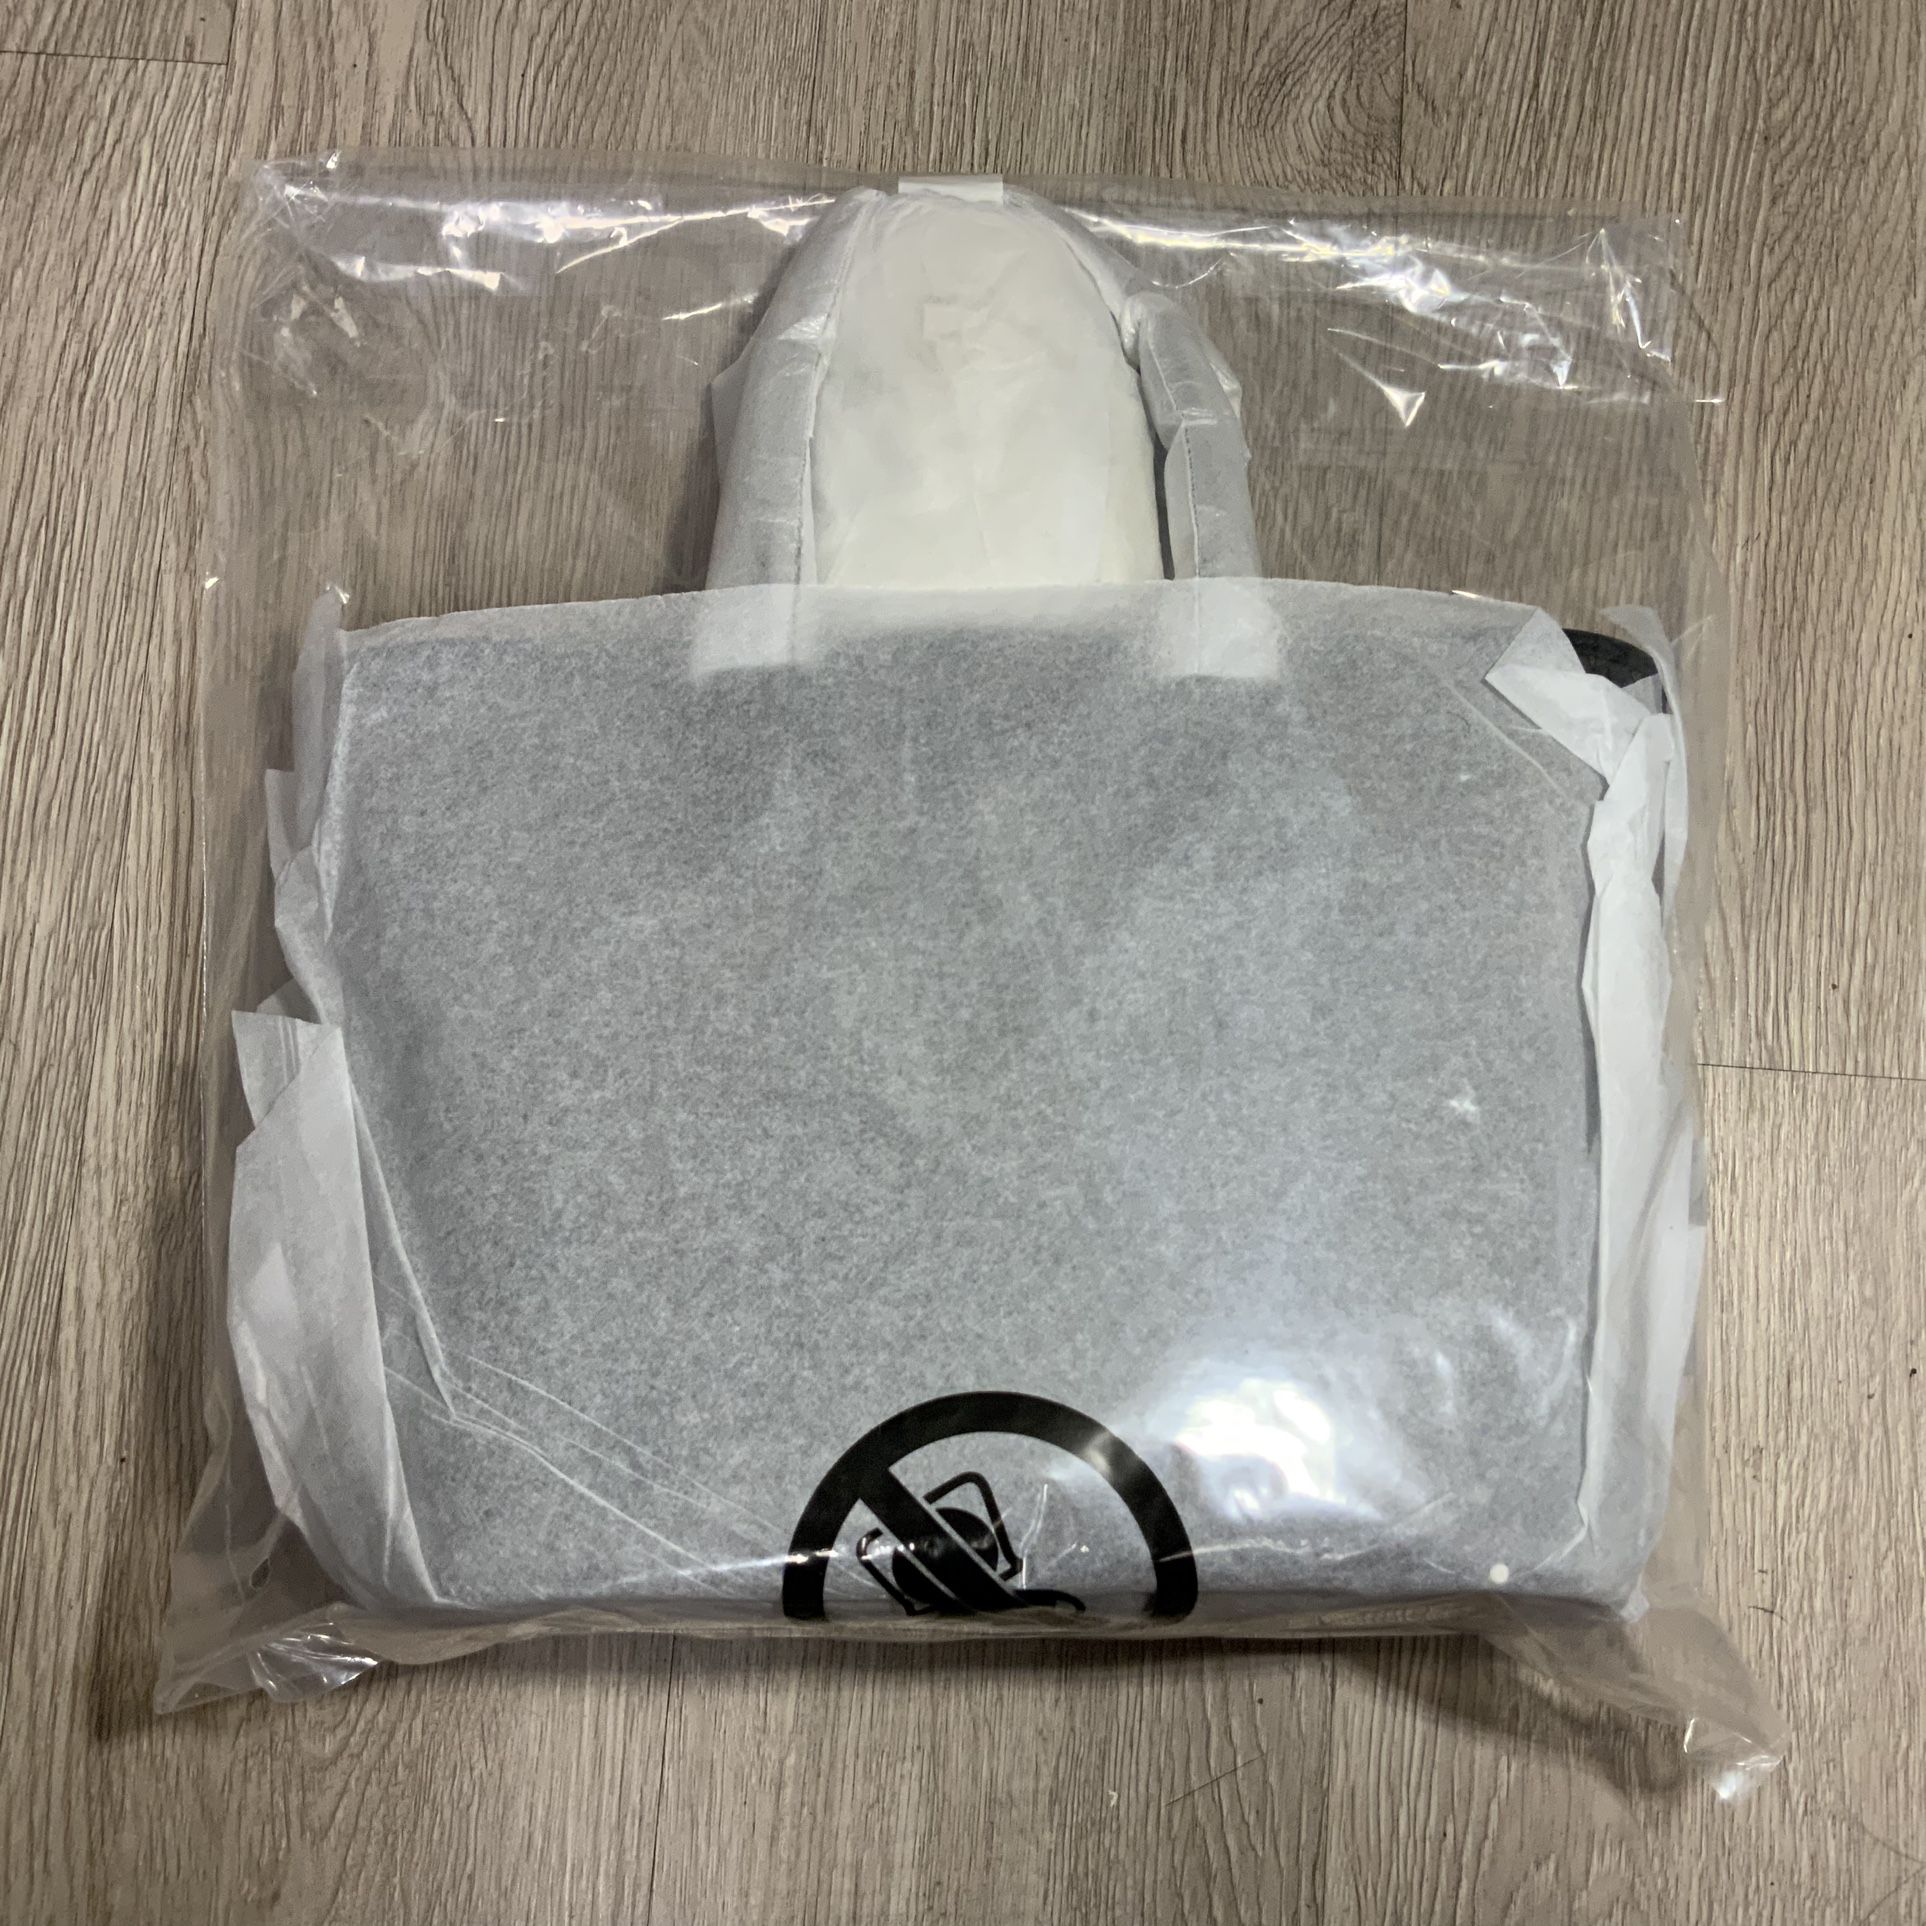 Michael Kors Jodie Small Atom Green Jacquard Recycled Polyester Tote Bag Handbag